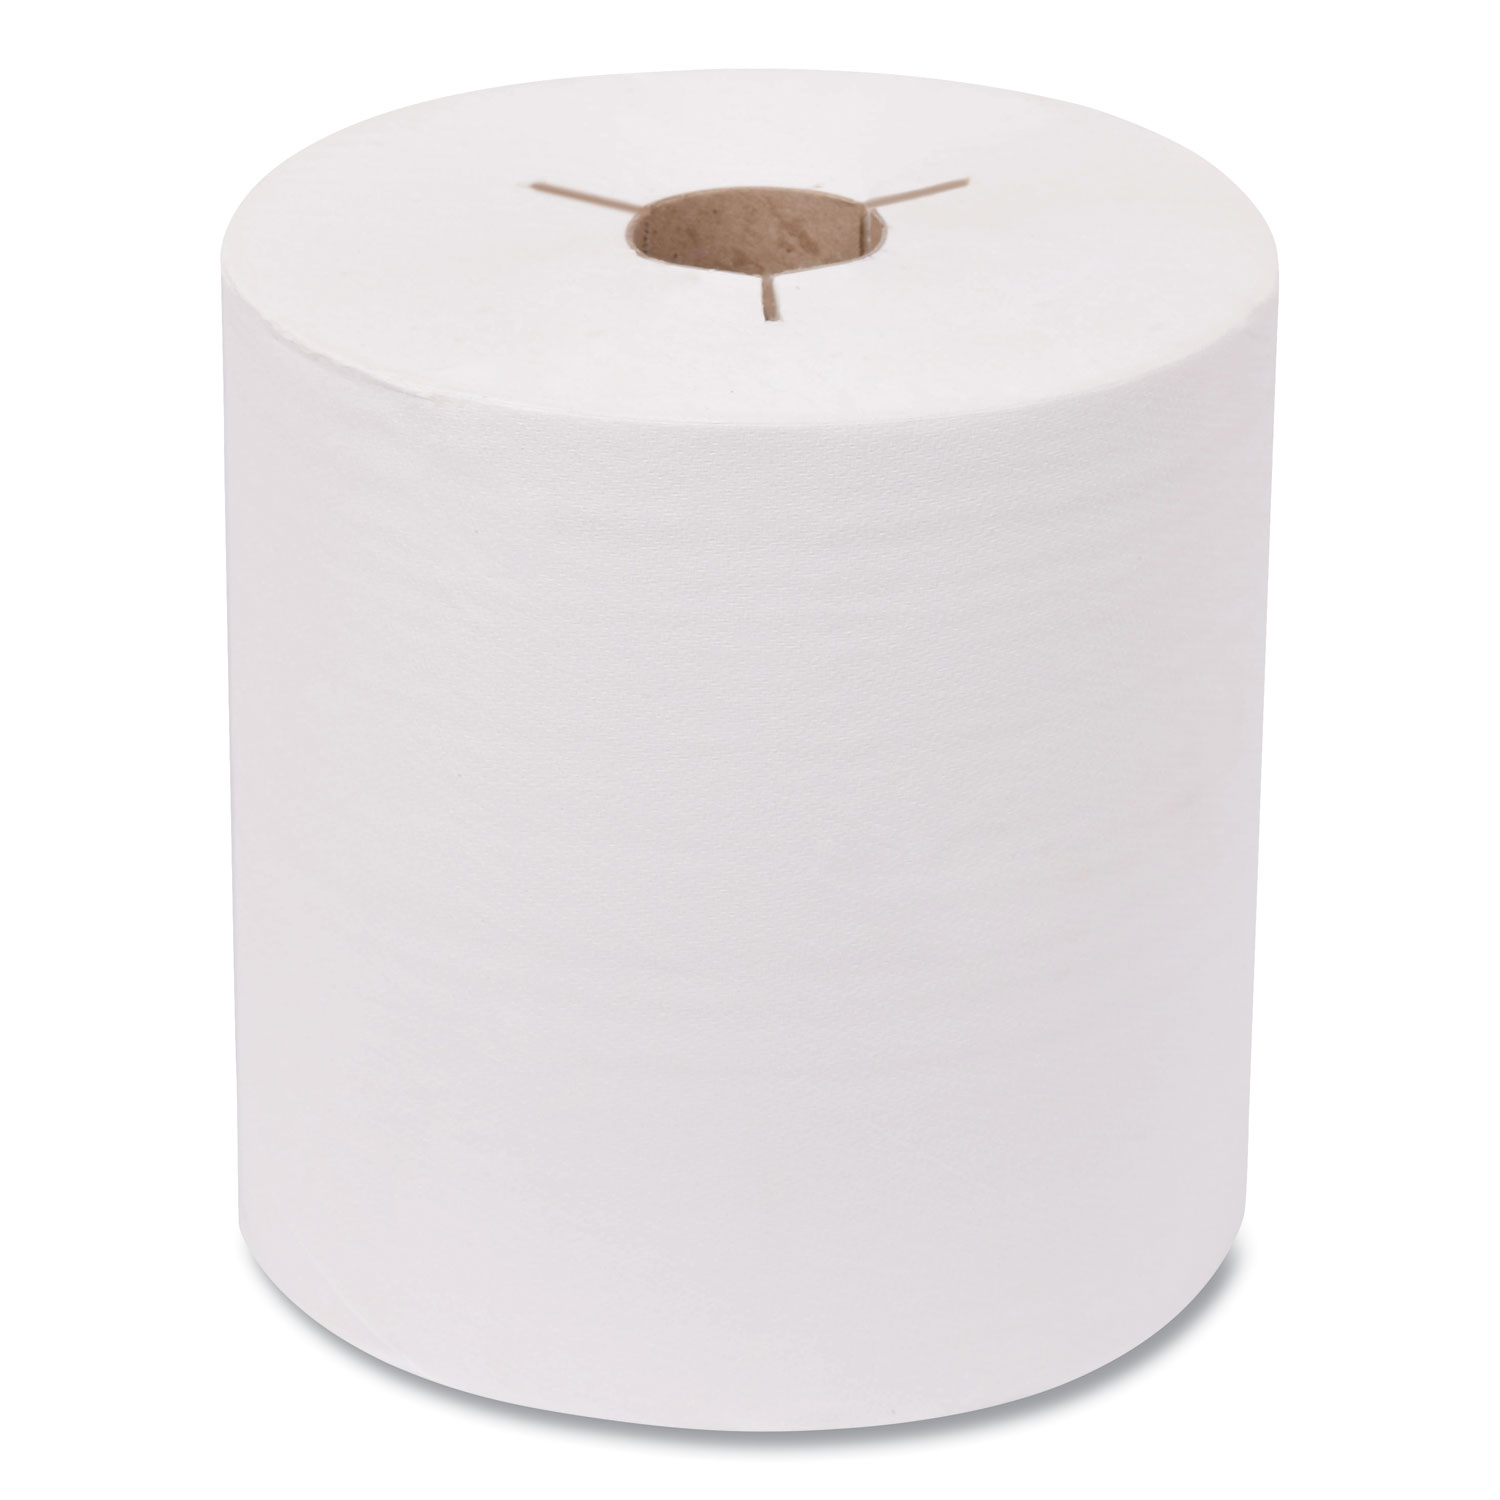  Tork 8038050 Advanced Hand Towel Roll, Notched, 8 x 800 ft, White, 6 Rolls/Carton (TRK8038050) 